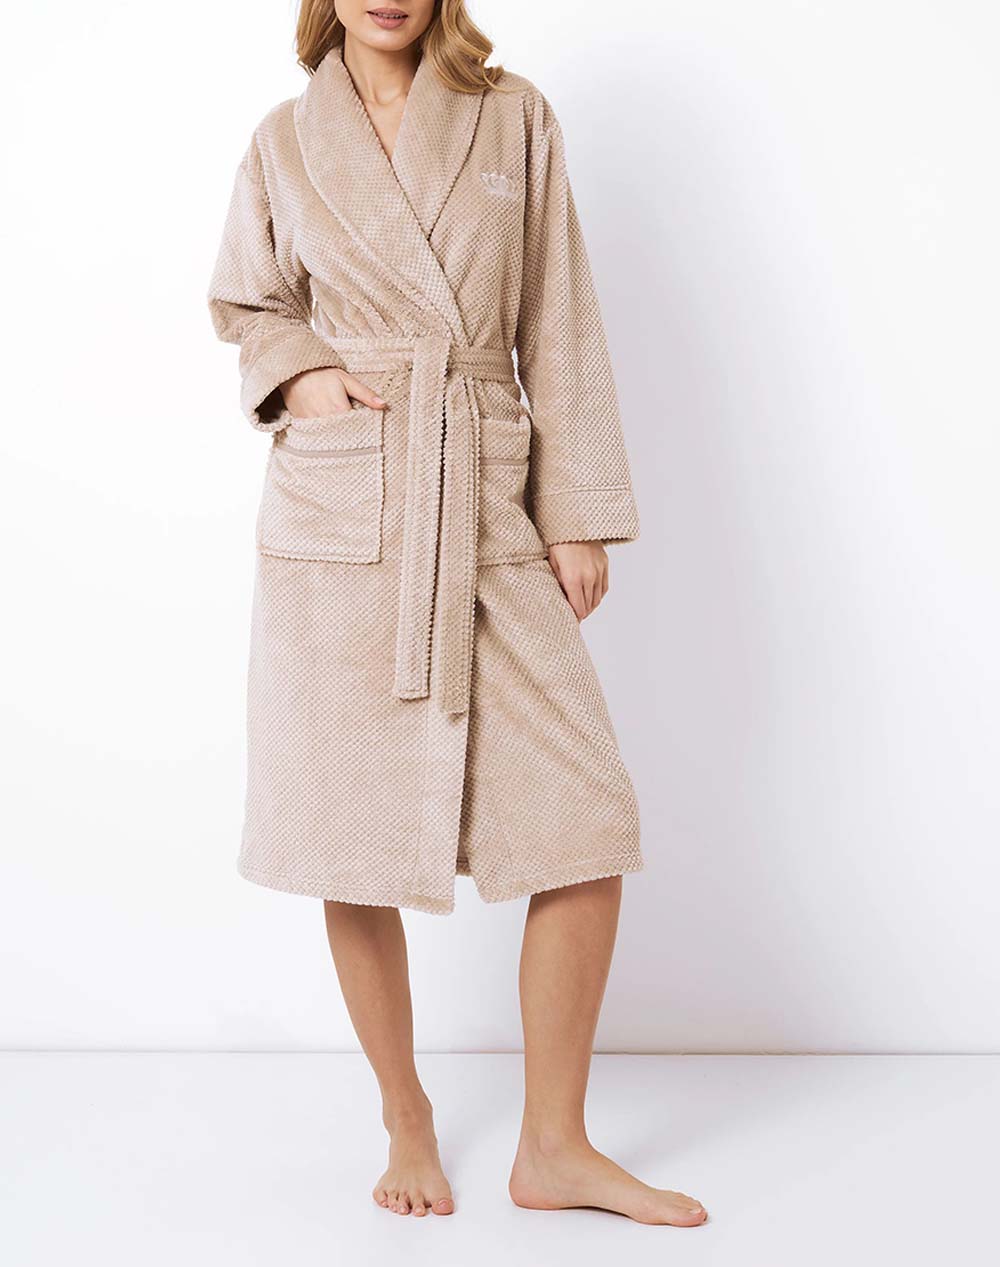 ARUELLE Keira bathrobe